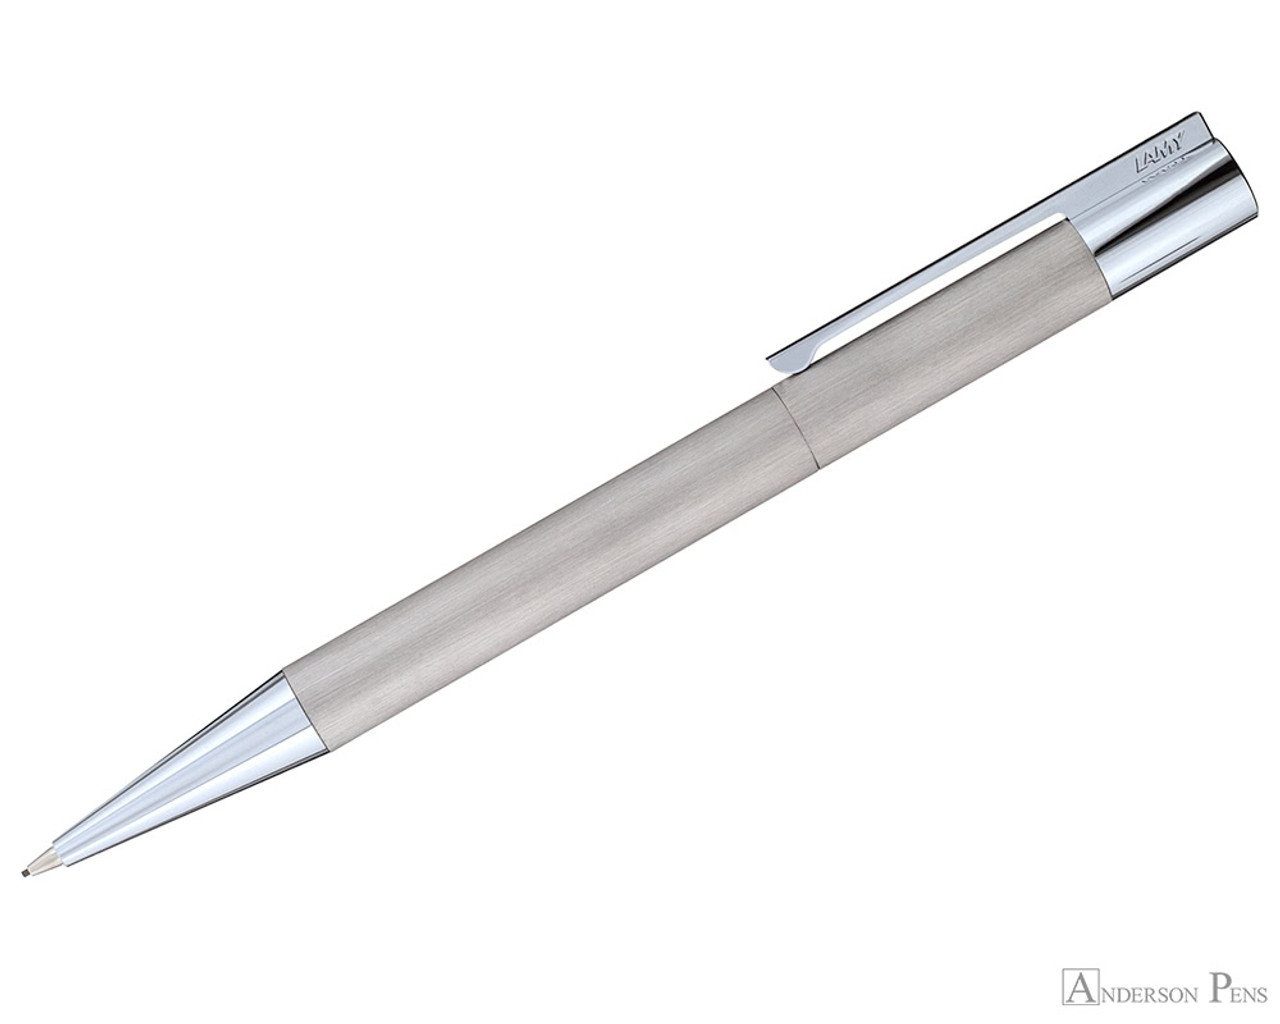 Heavy Metal Mechanical Pencil - S100WPL